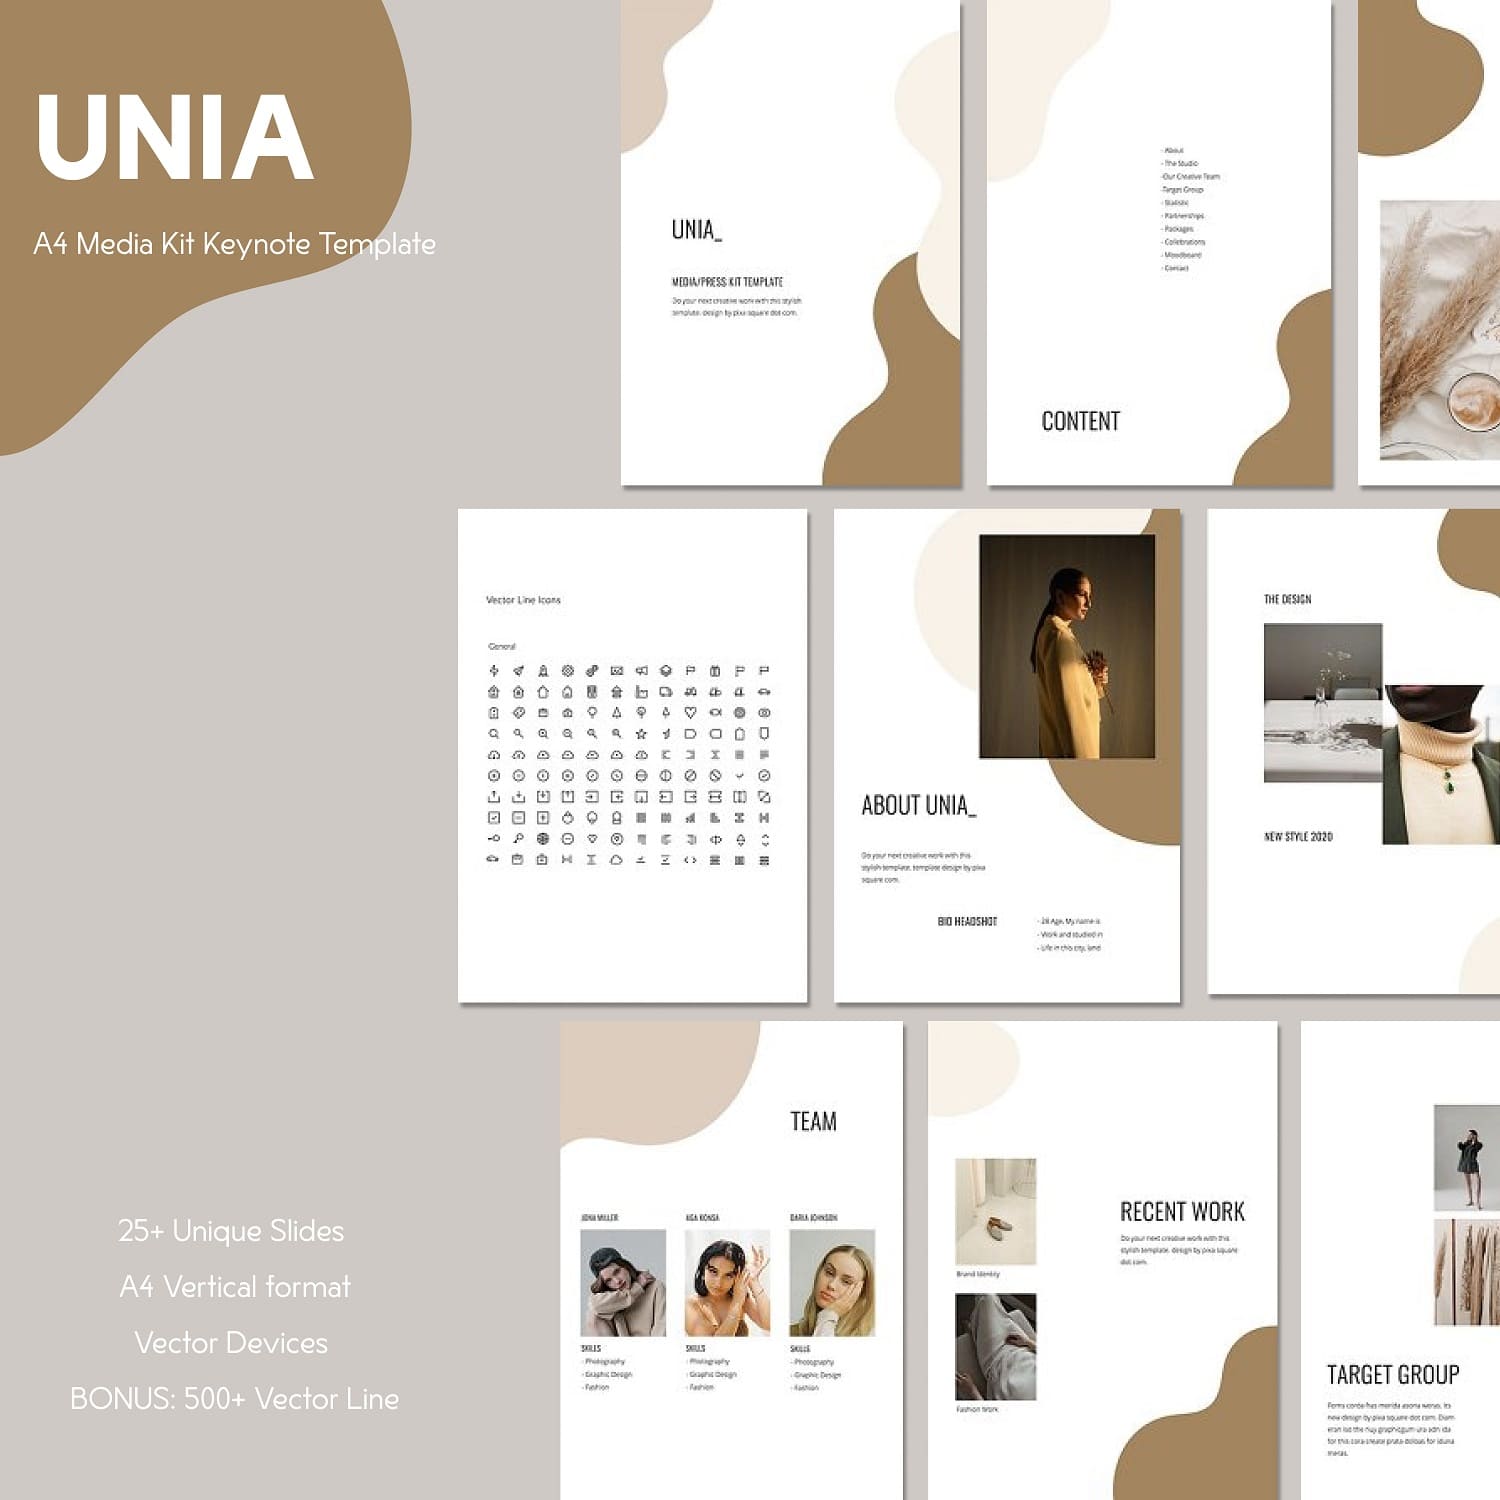 A4 Vertical format of Unia.